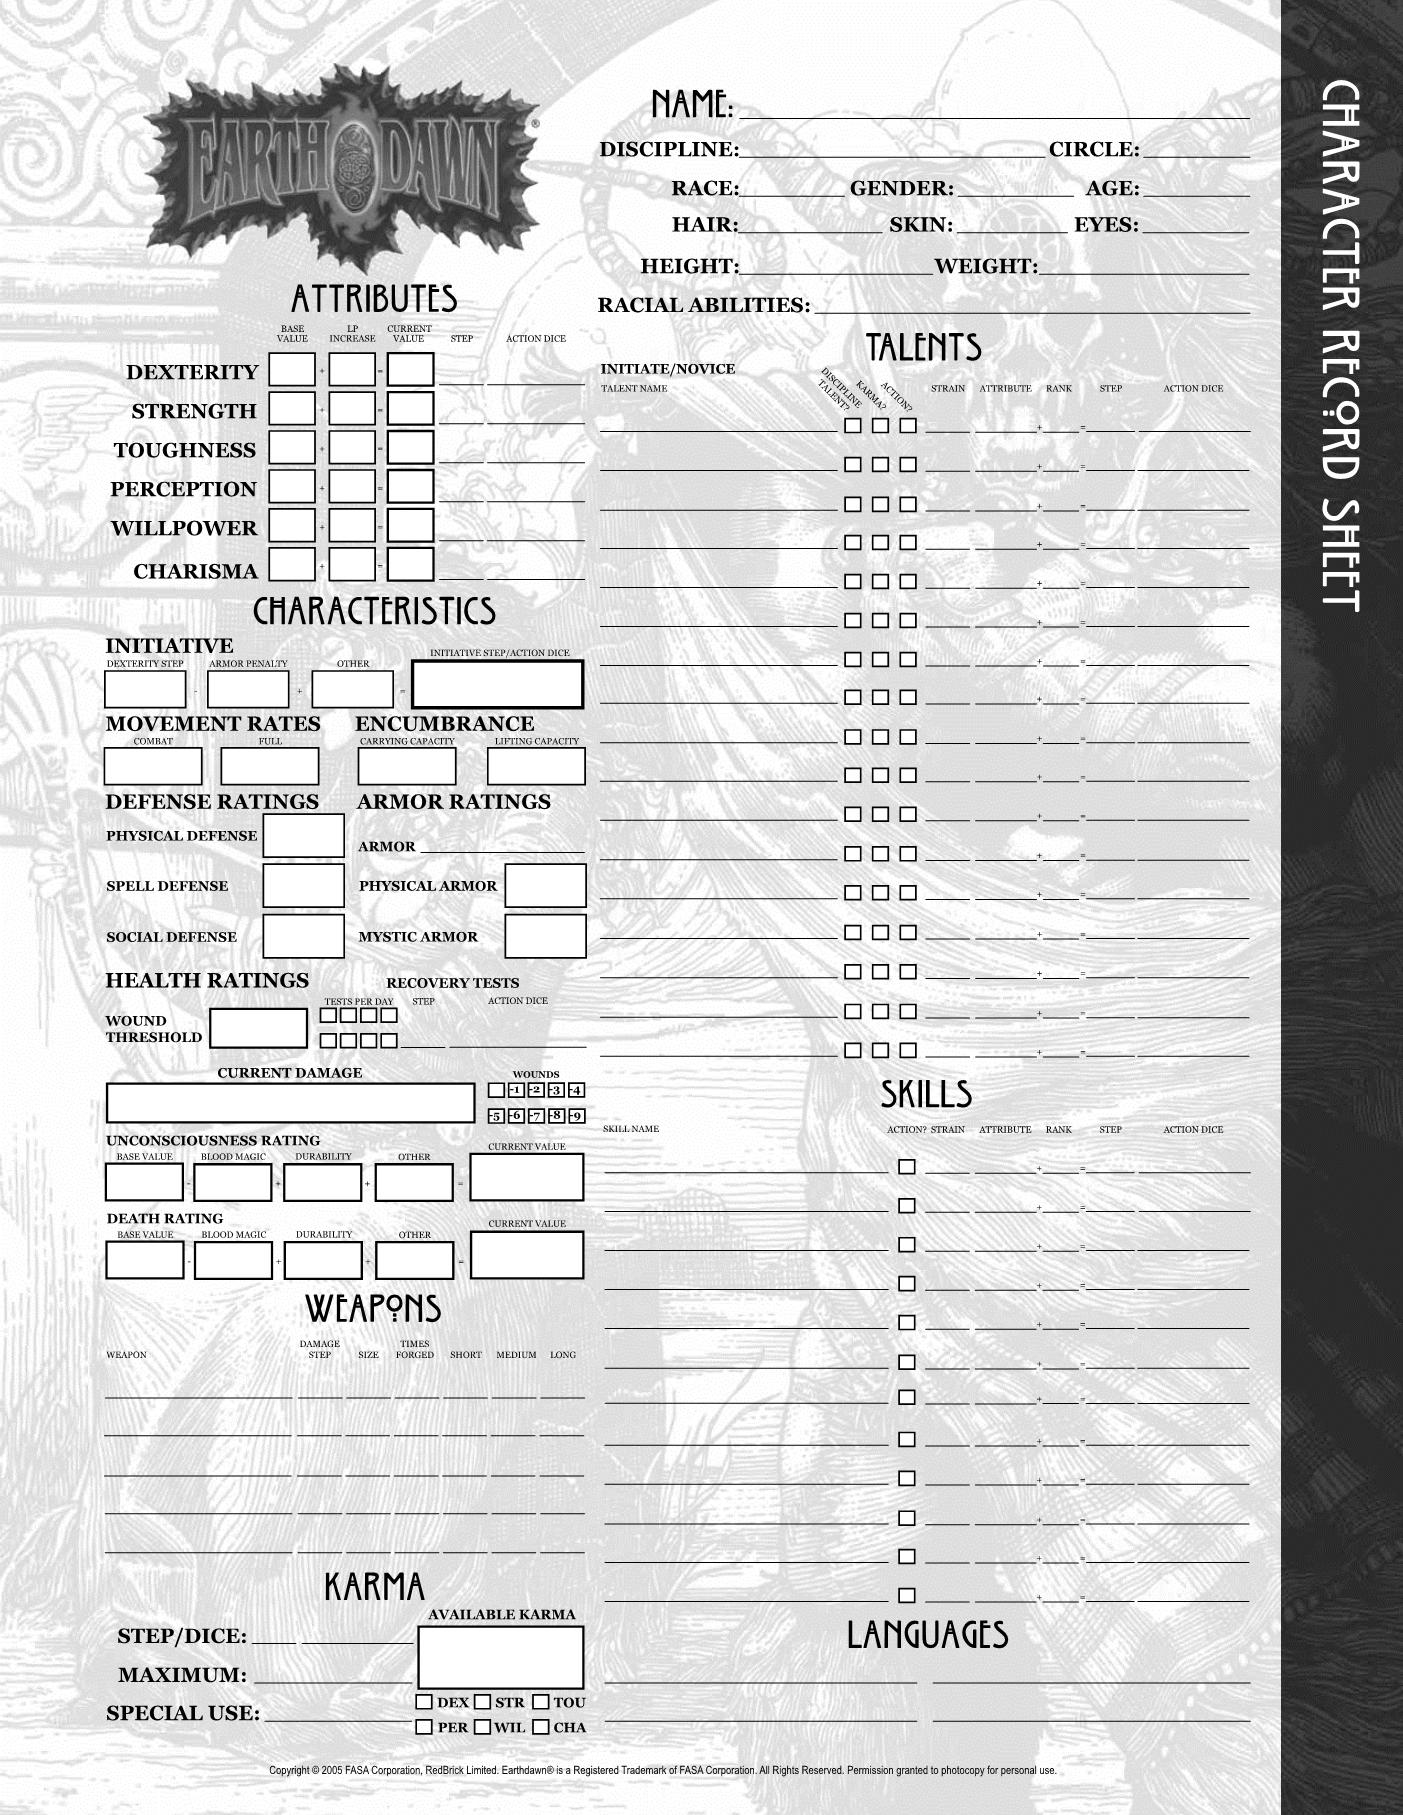 earthdawn 2nd edition character sheet.